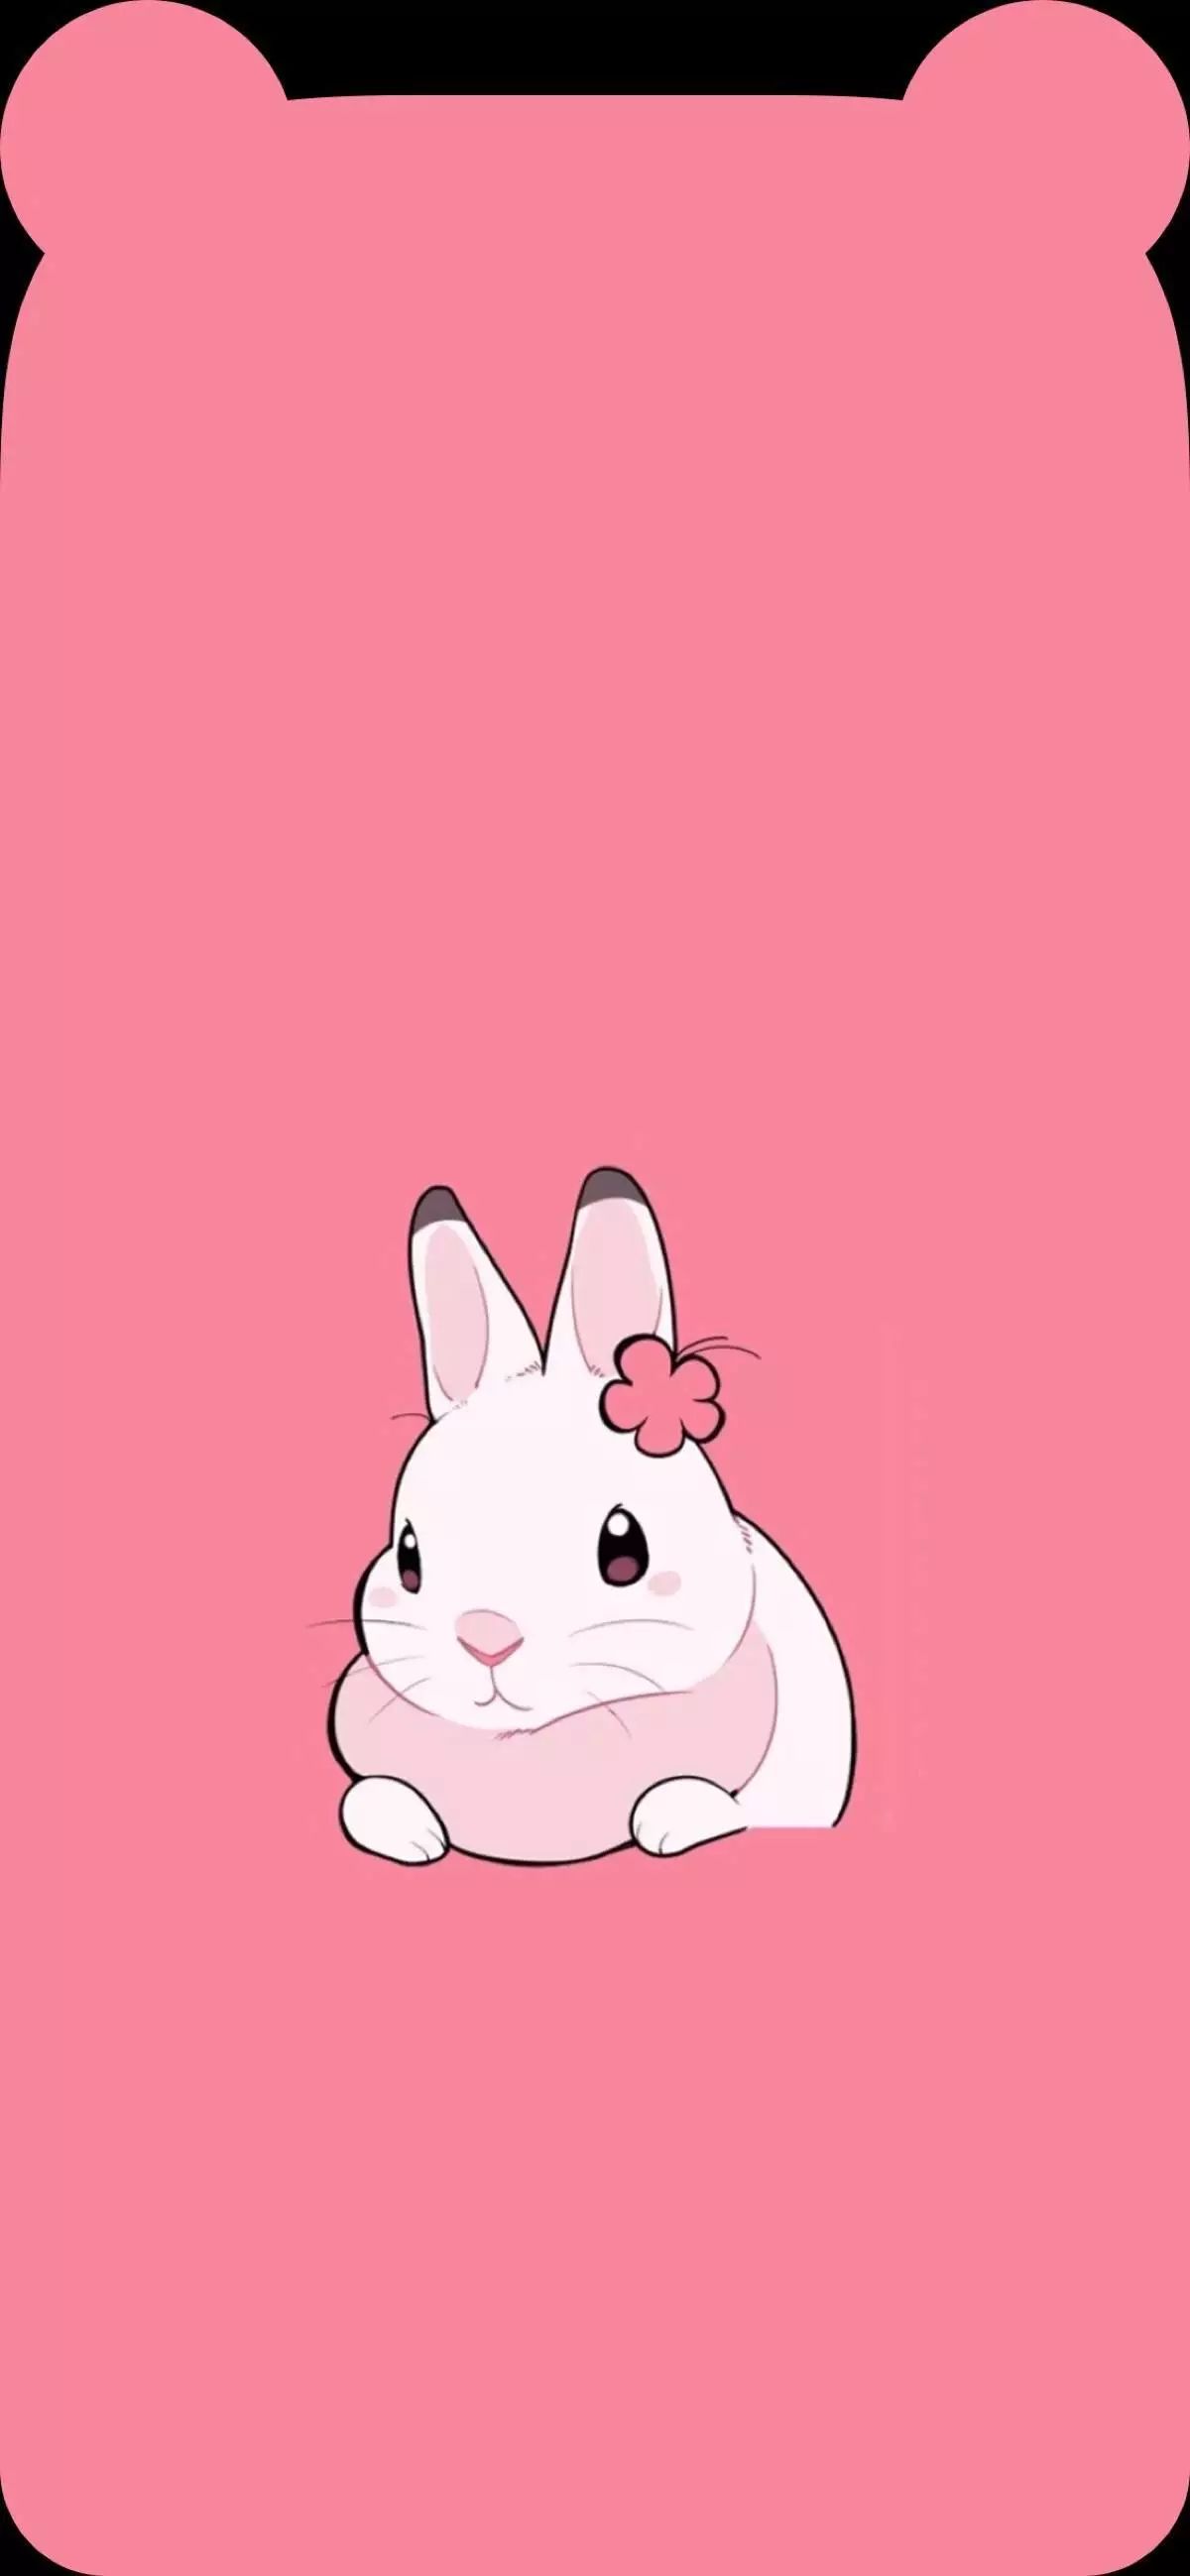 【iphone x 小耳朵壁纸】粉色系少女心系列